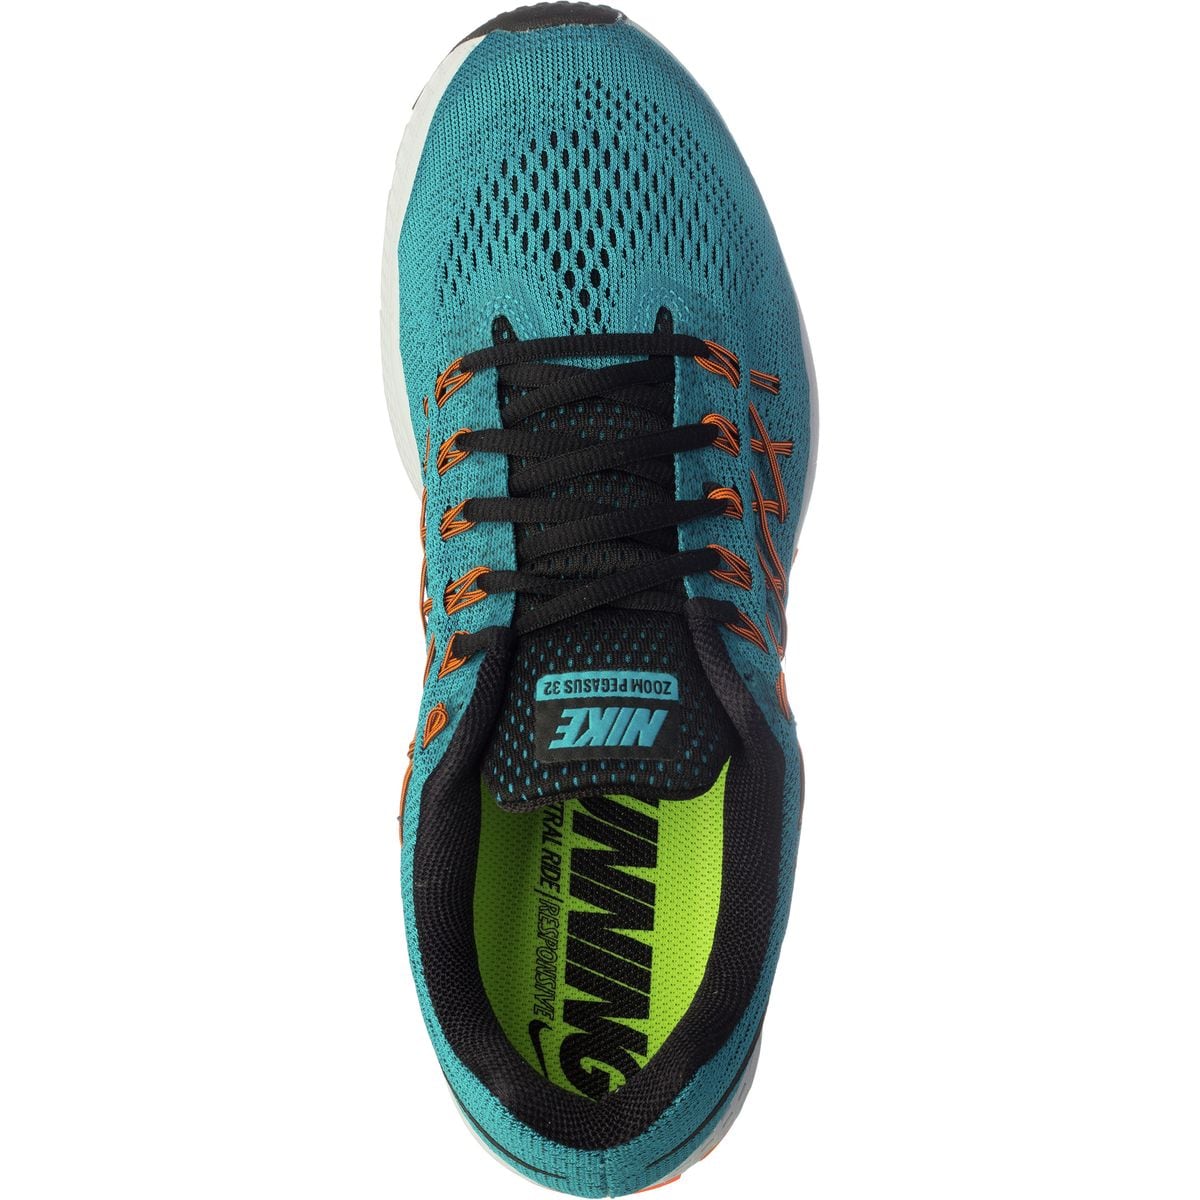 Plagen Vertrouwen op Jeugd Nike Air Zoom Pegasus 32 Running Shoe - Men's - Footwear